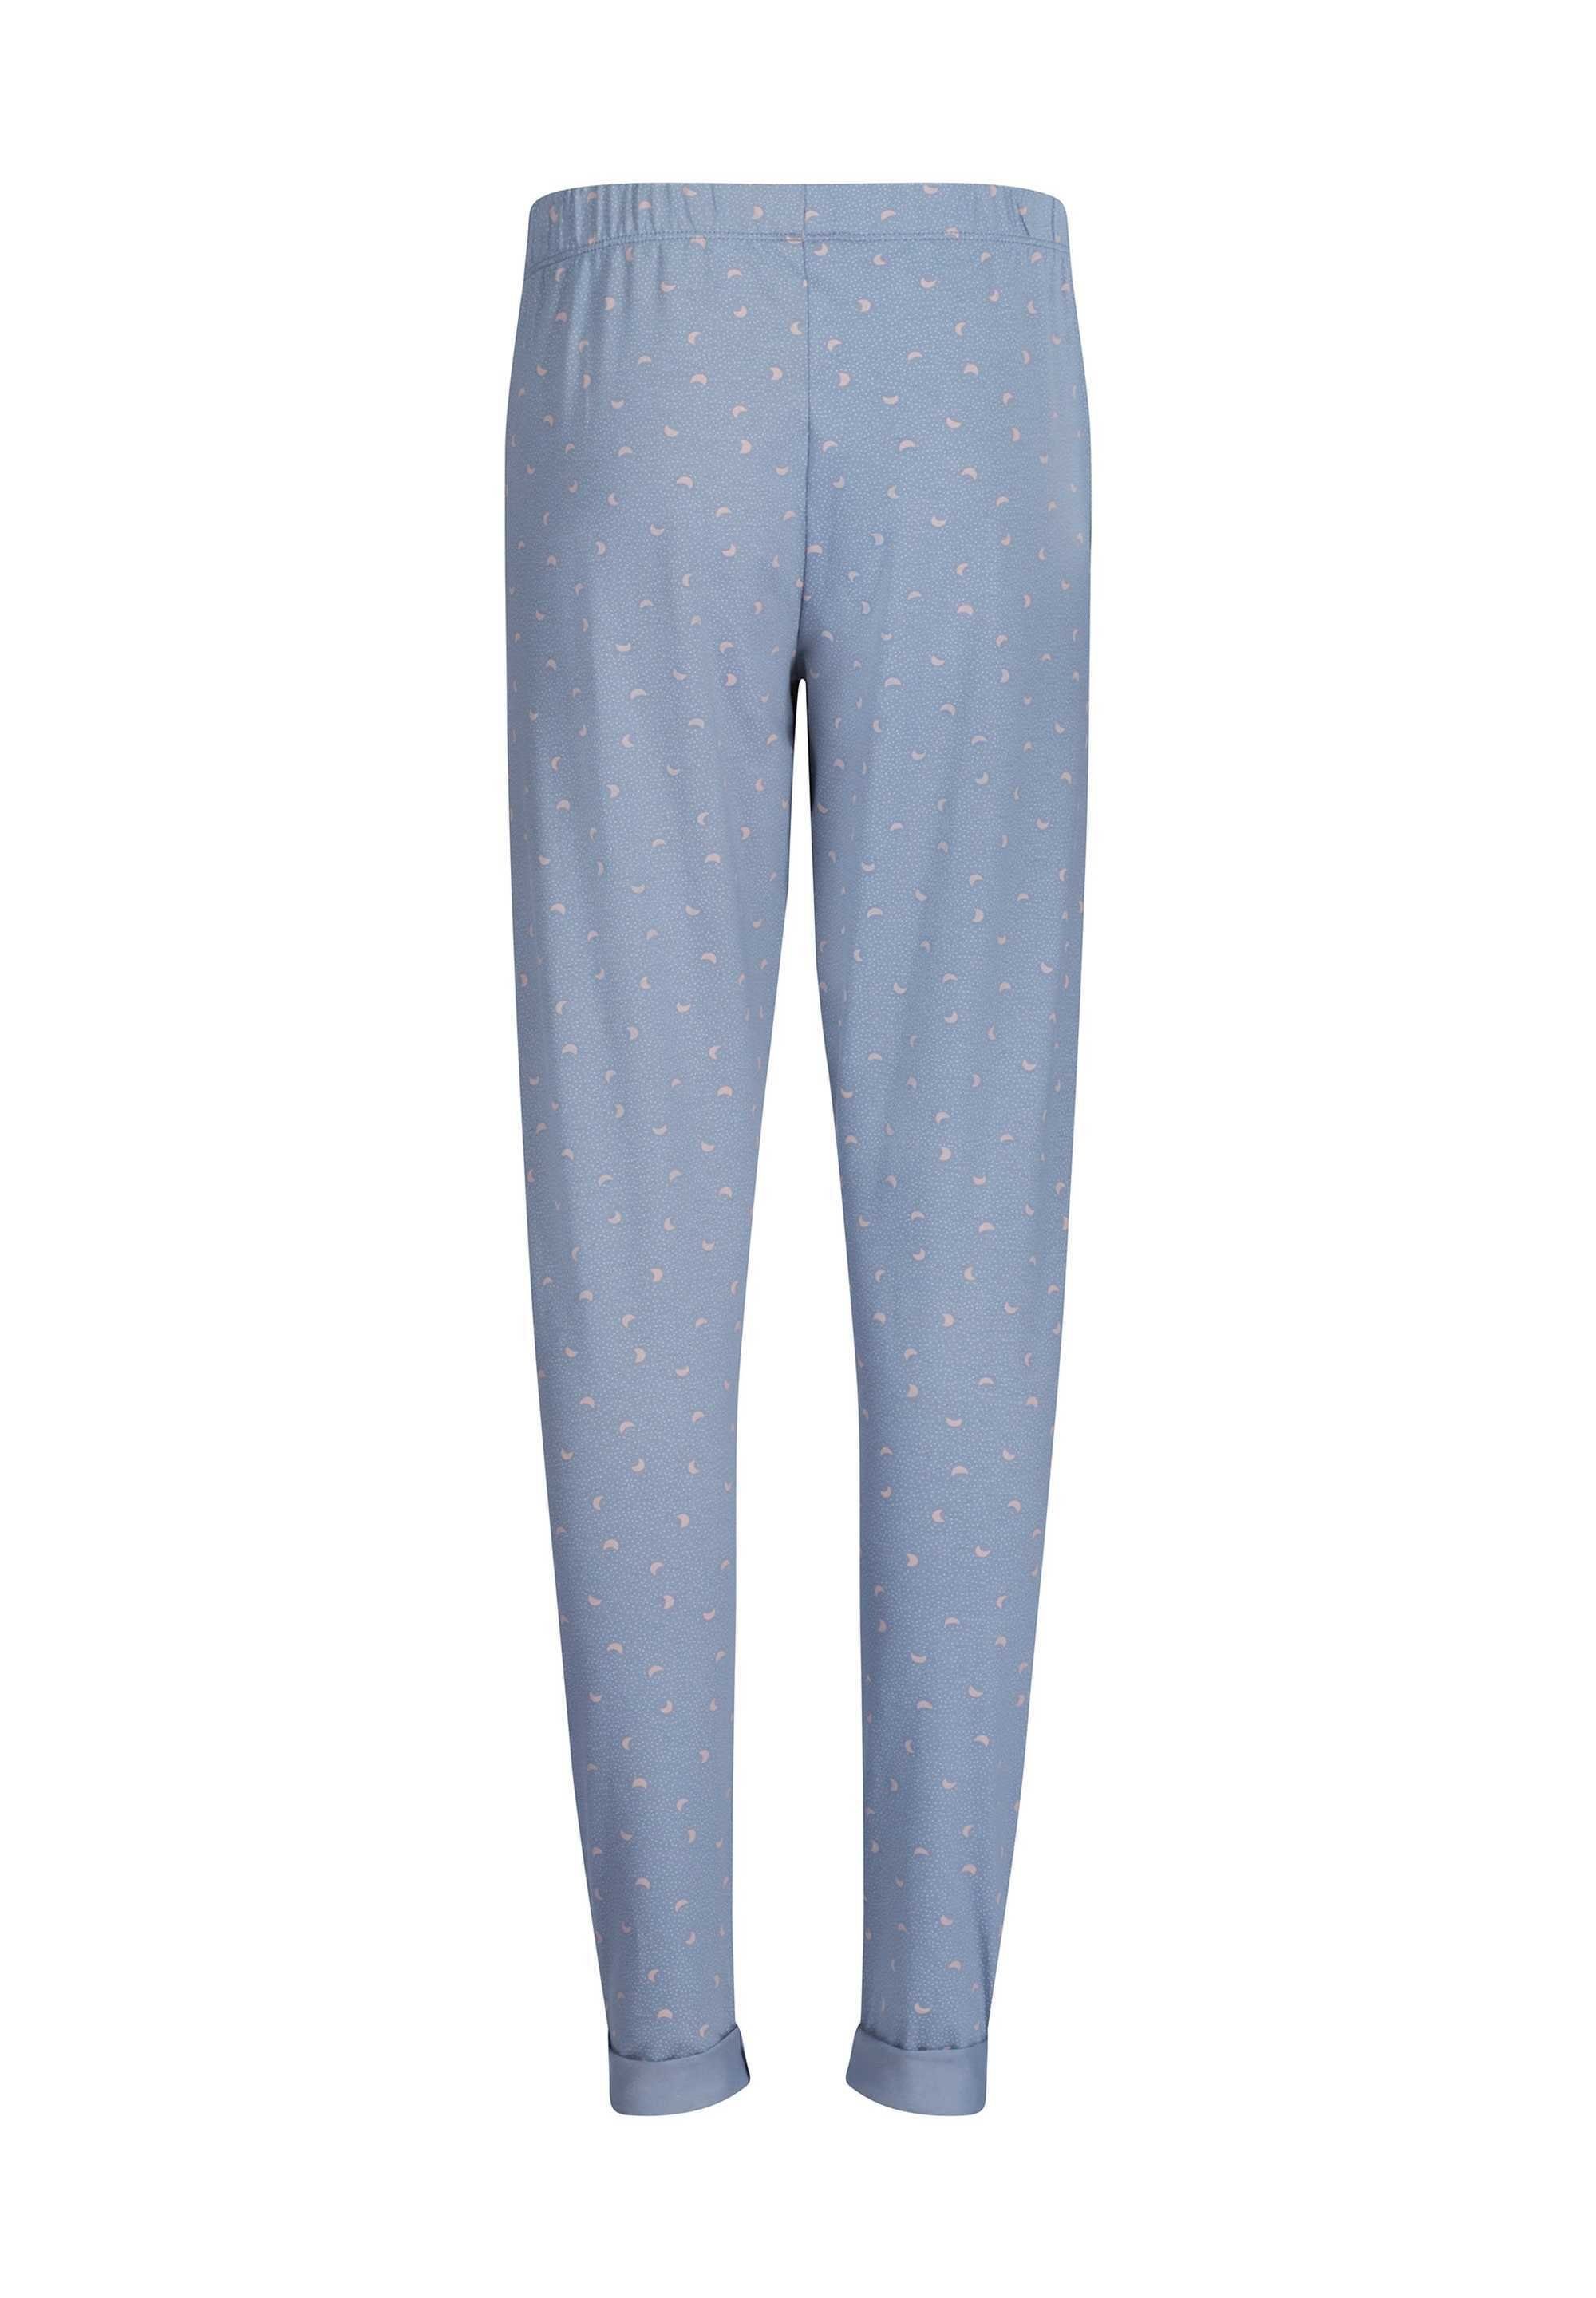 Mädchen Kinder, lang, Set - Schlafanzug Pyjama Grau-Blau 2-tlg. Skiny